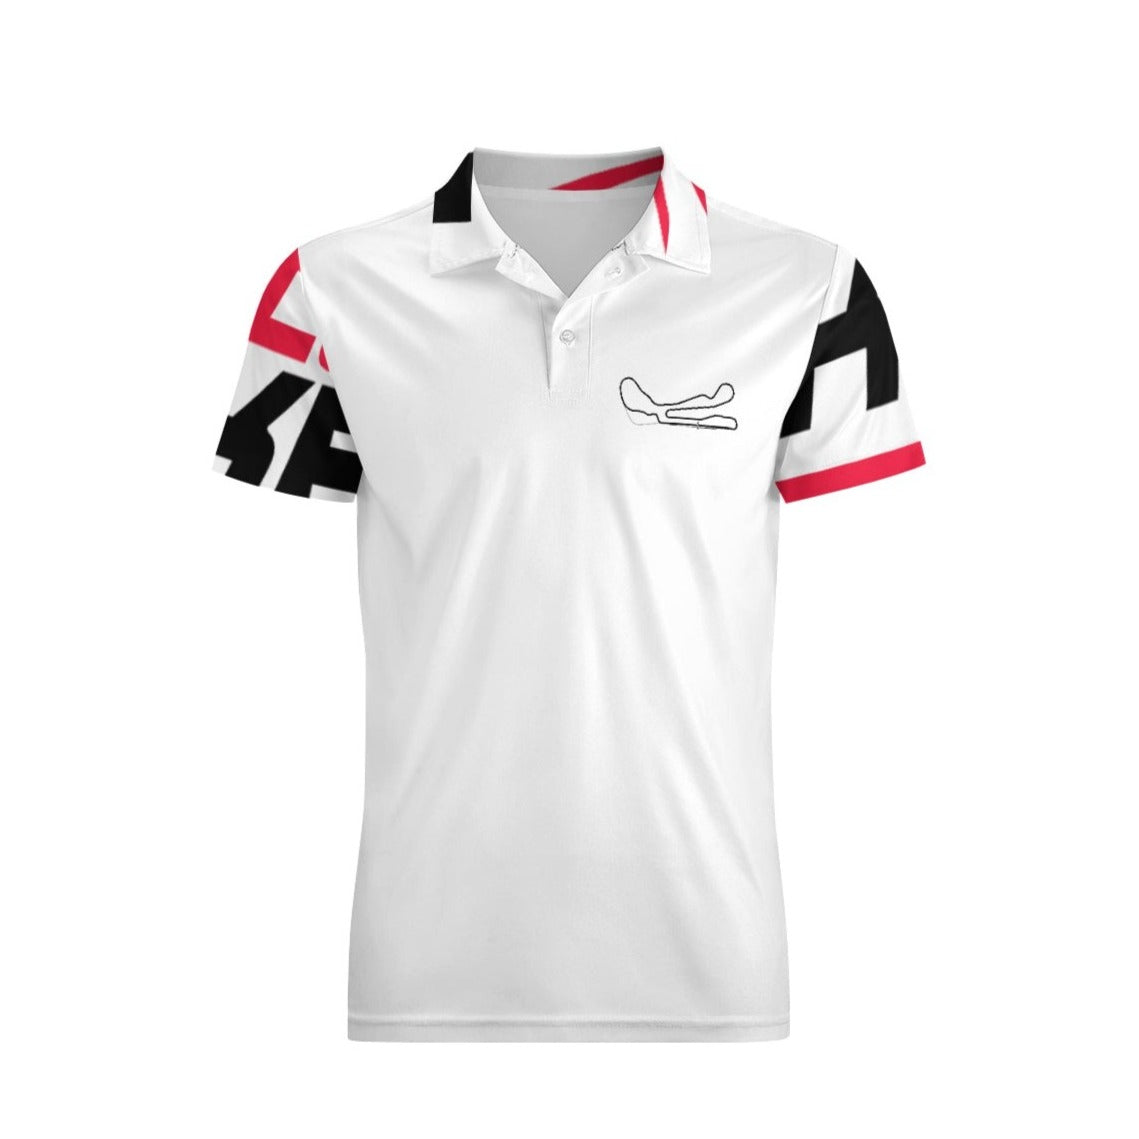 CIRCUITO MIKE G - Polo shirt - Track - circuit white